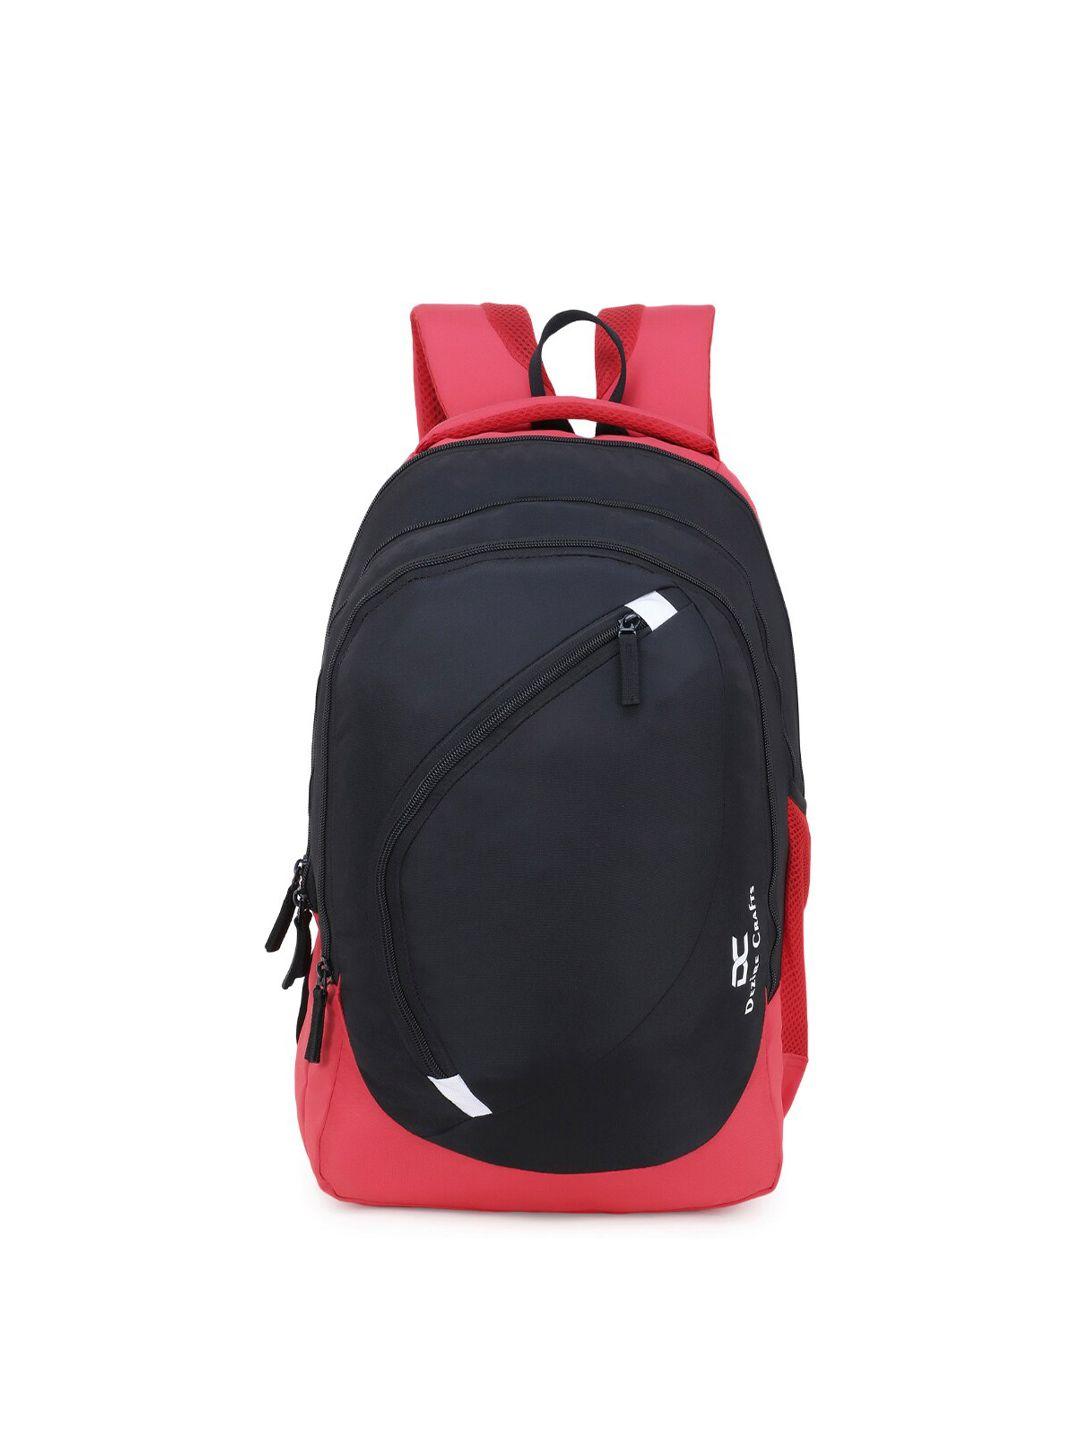 dezire crafts unisex black & pink colourblocked backpack